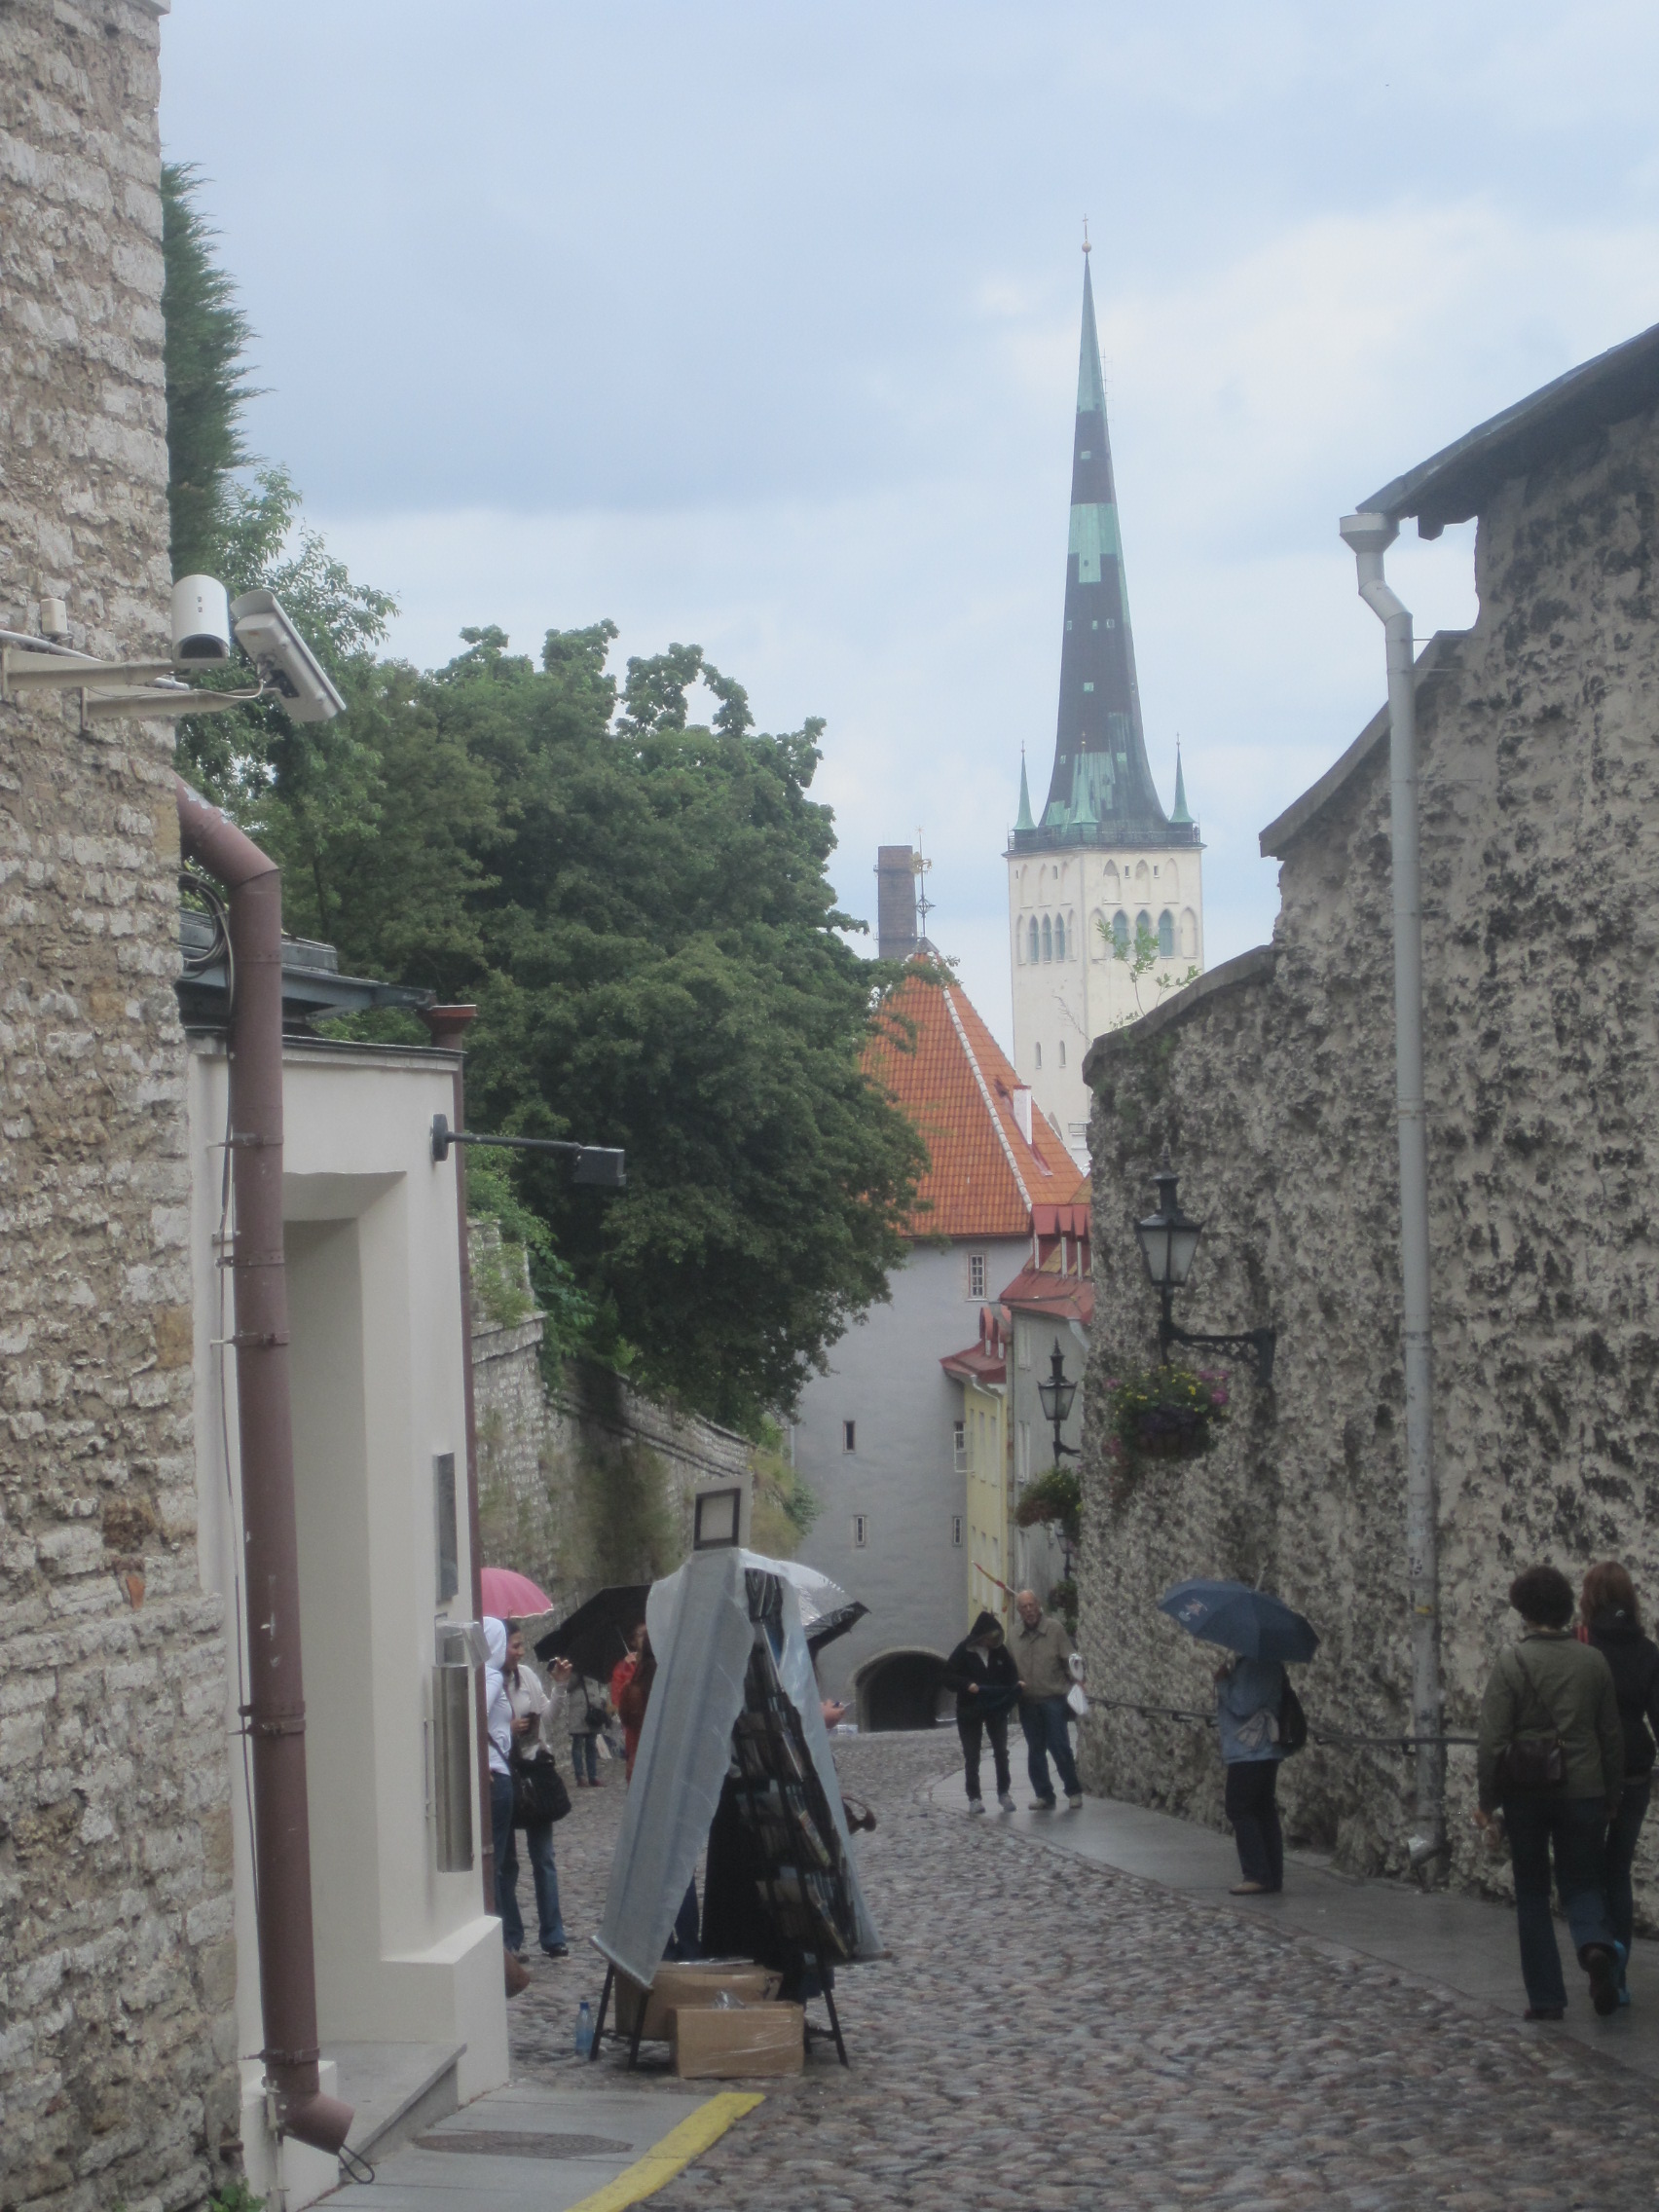 View of St. Olaf's Church, Tallinn